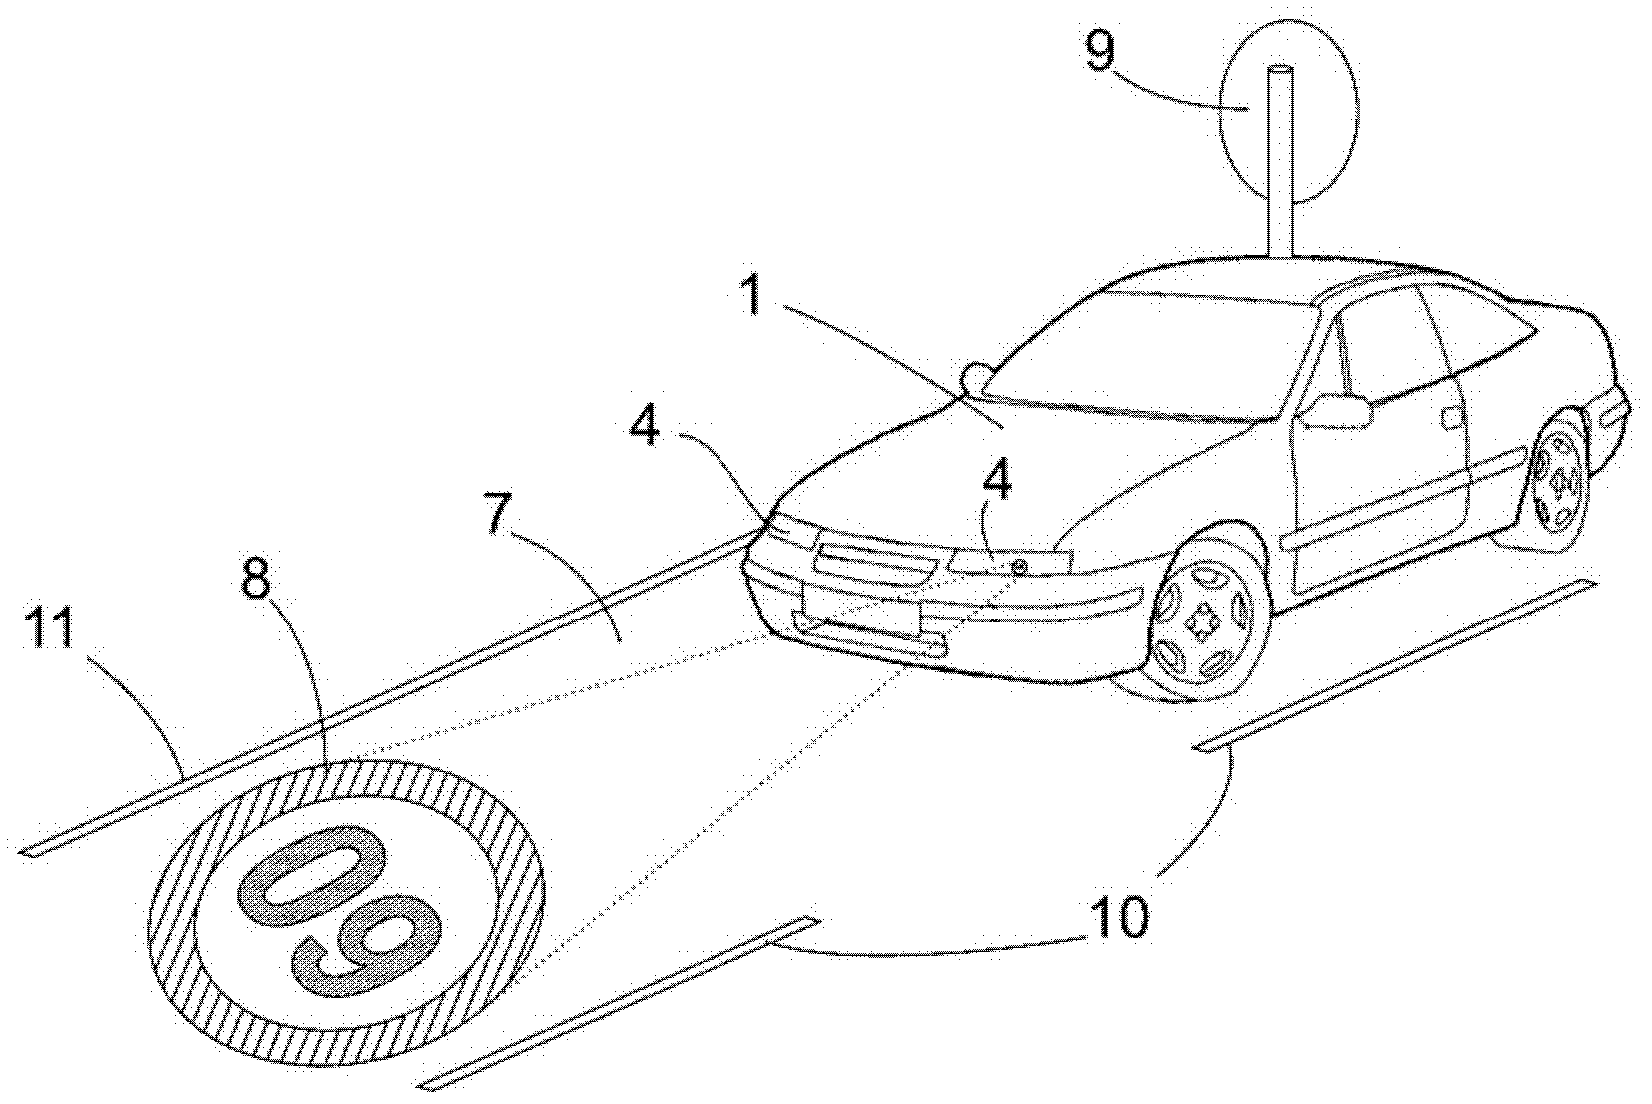 Motor vehicle with digital projectors